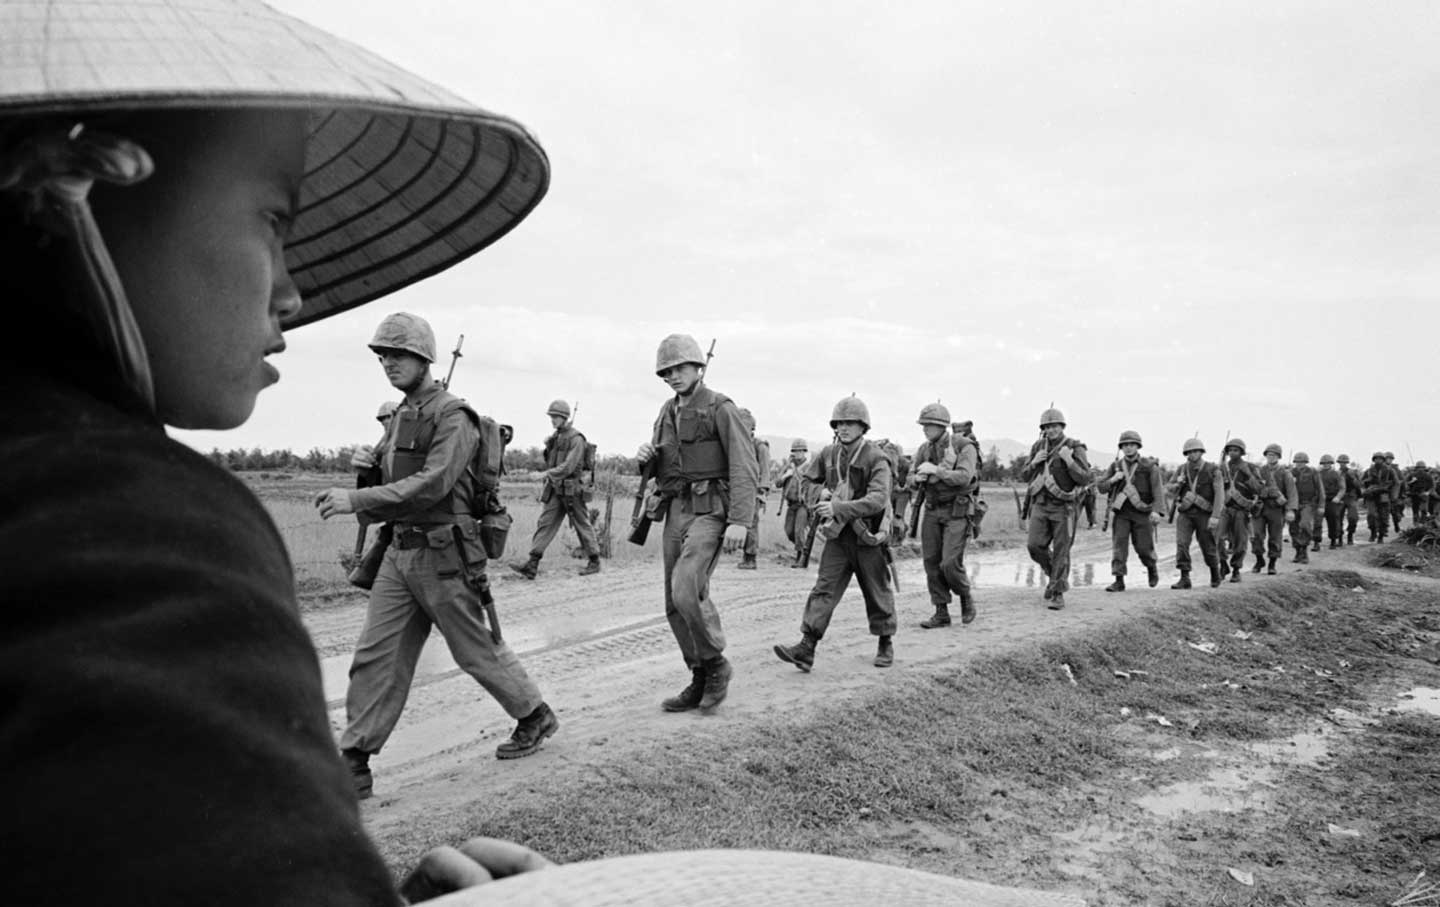 why was the vietnam war called a quagmire